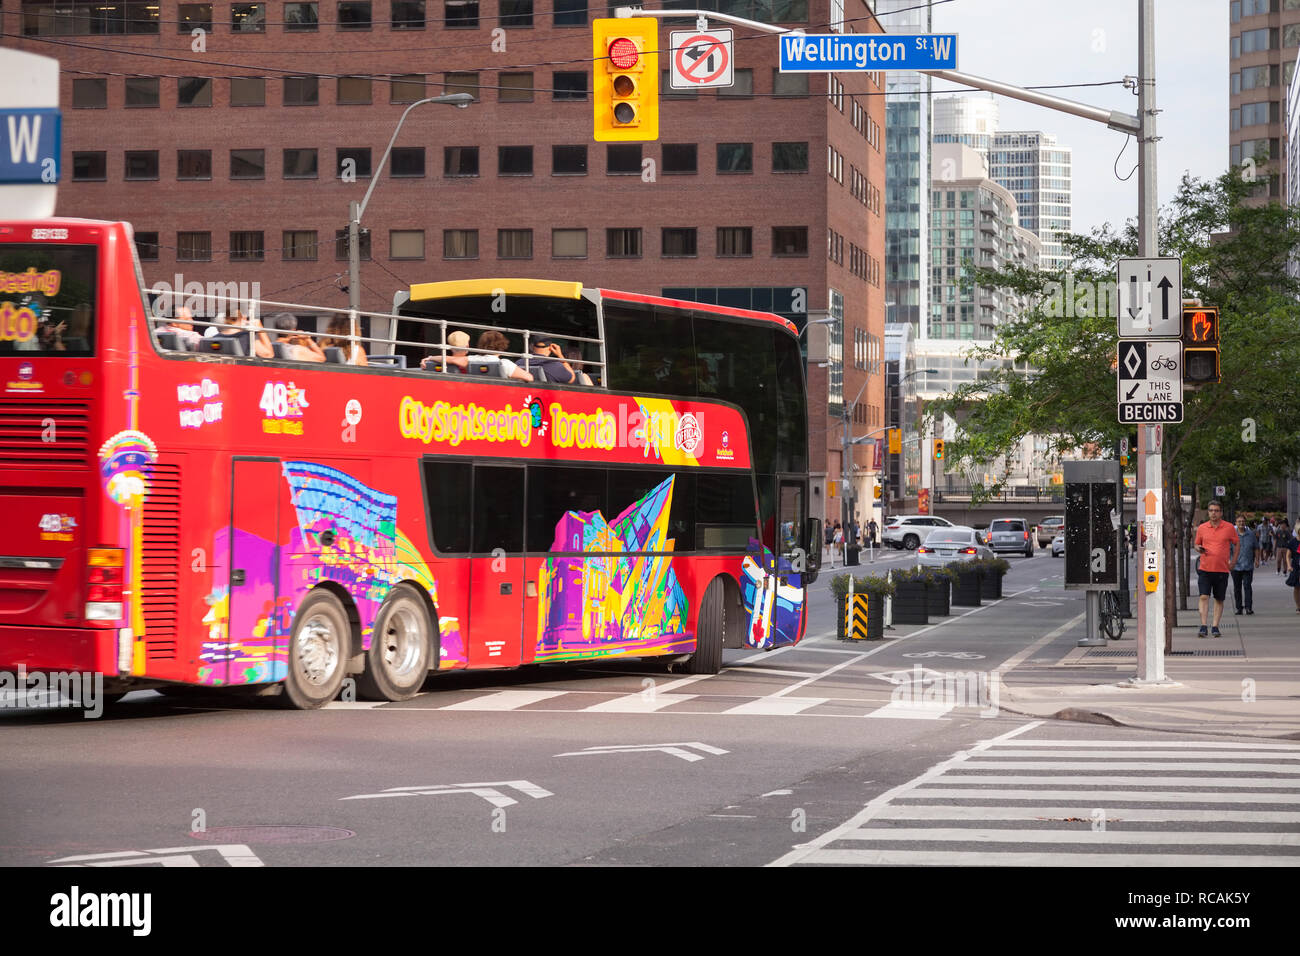 A City Sightseeing Toronto tour bus along Wellington Street W. City of Toronto, Ontario, Canada. Stock Photo